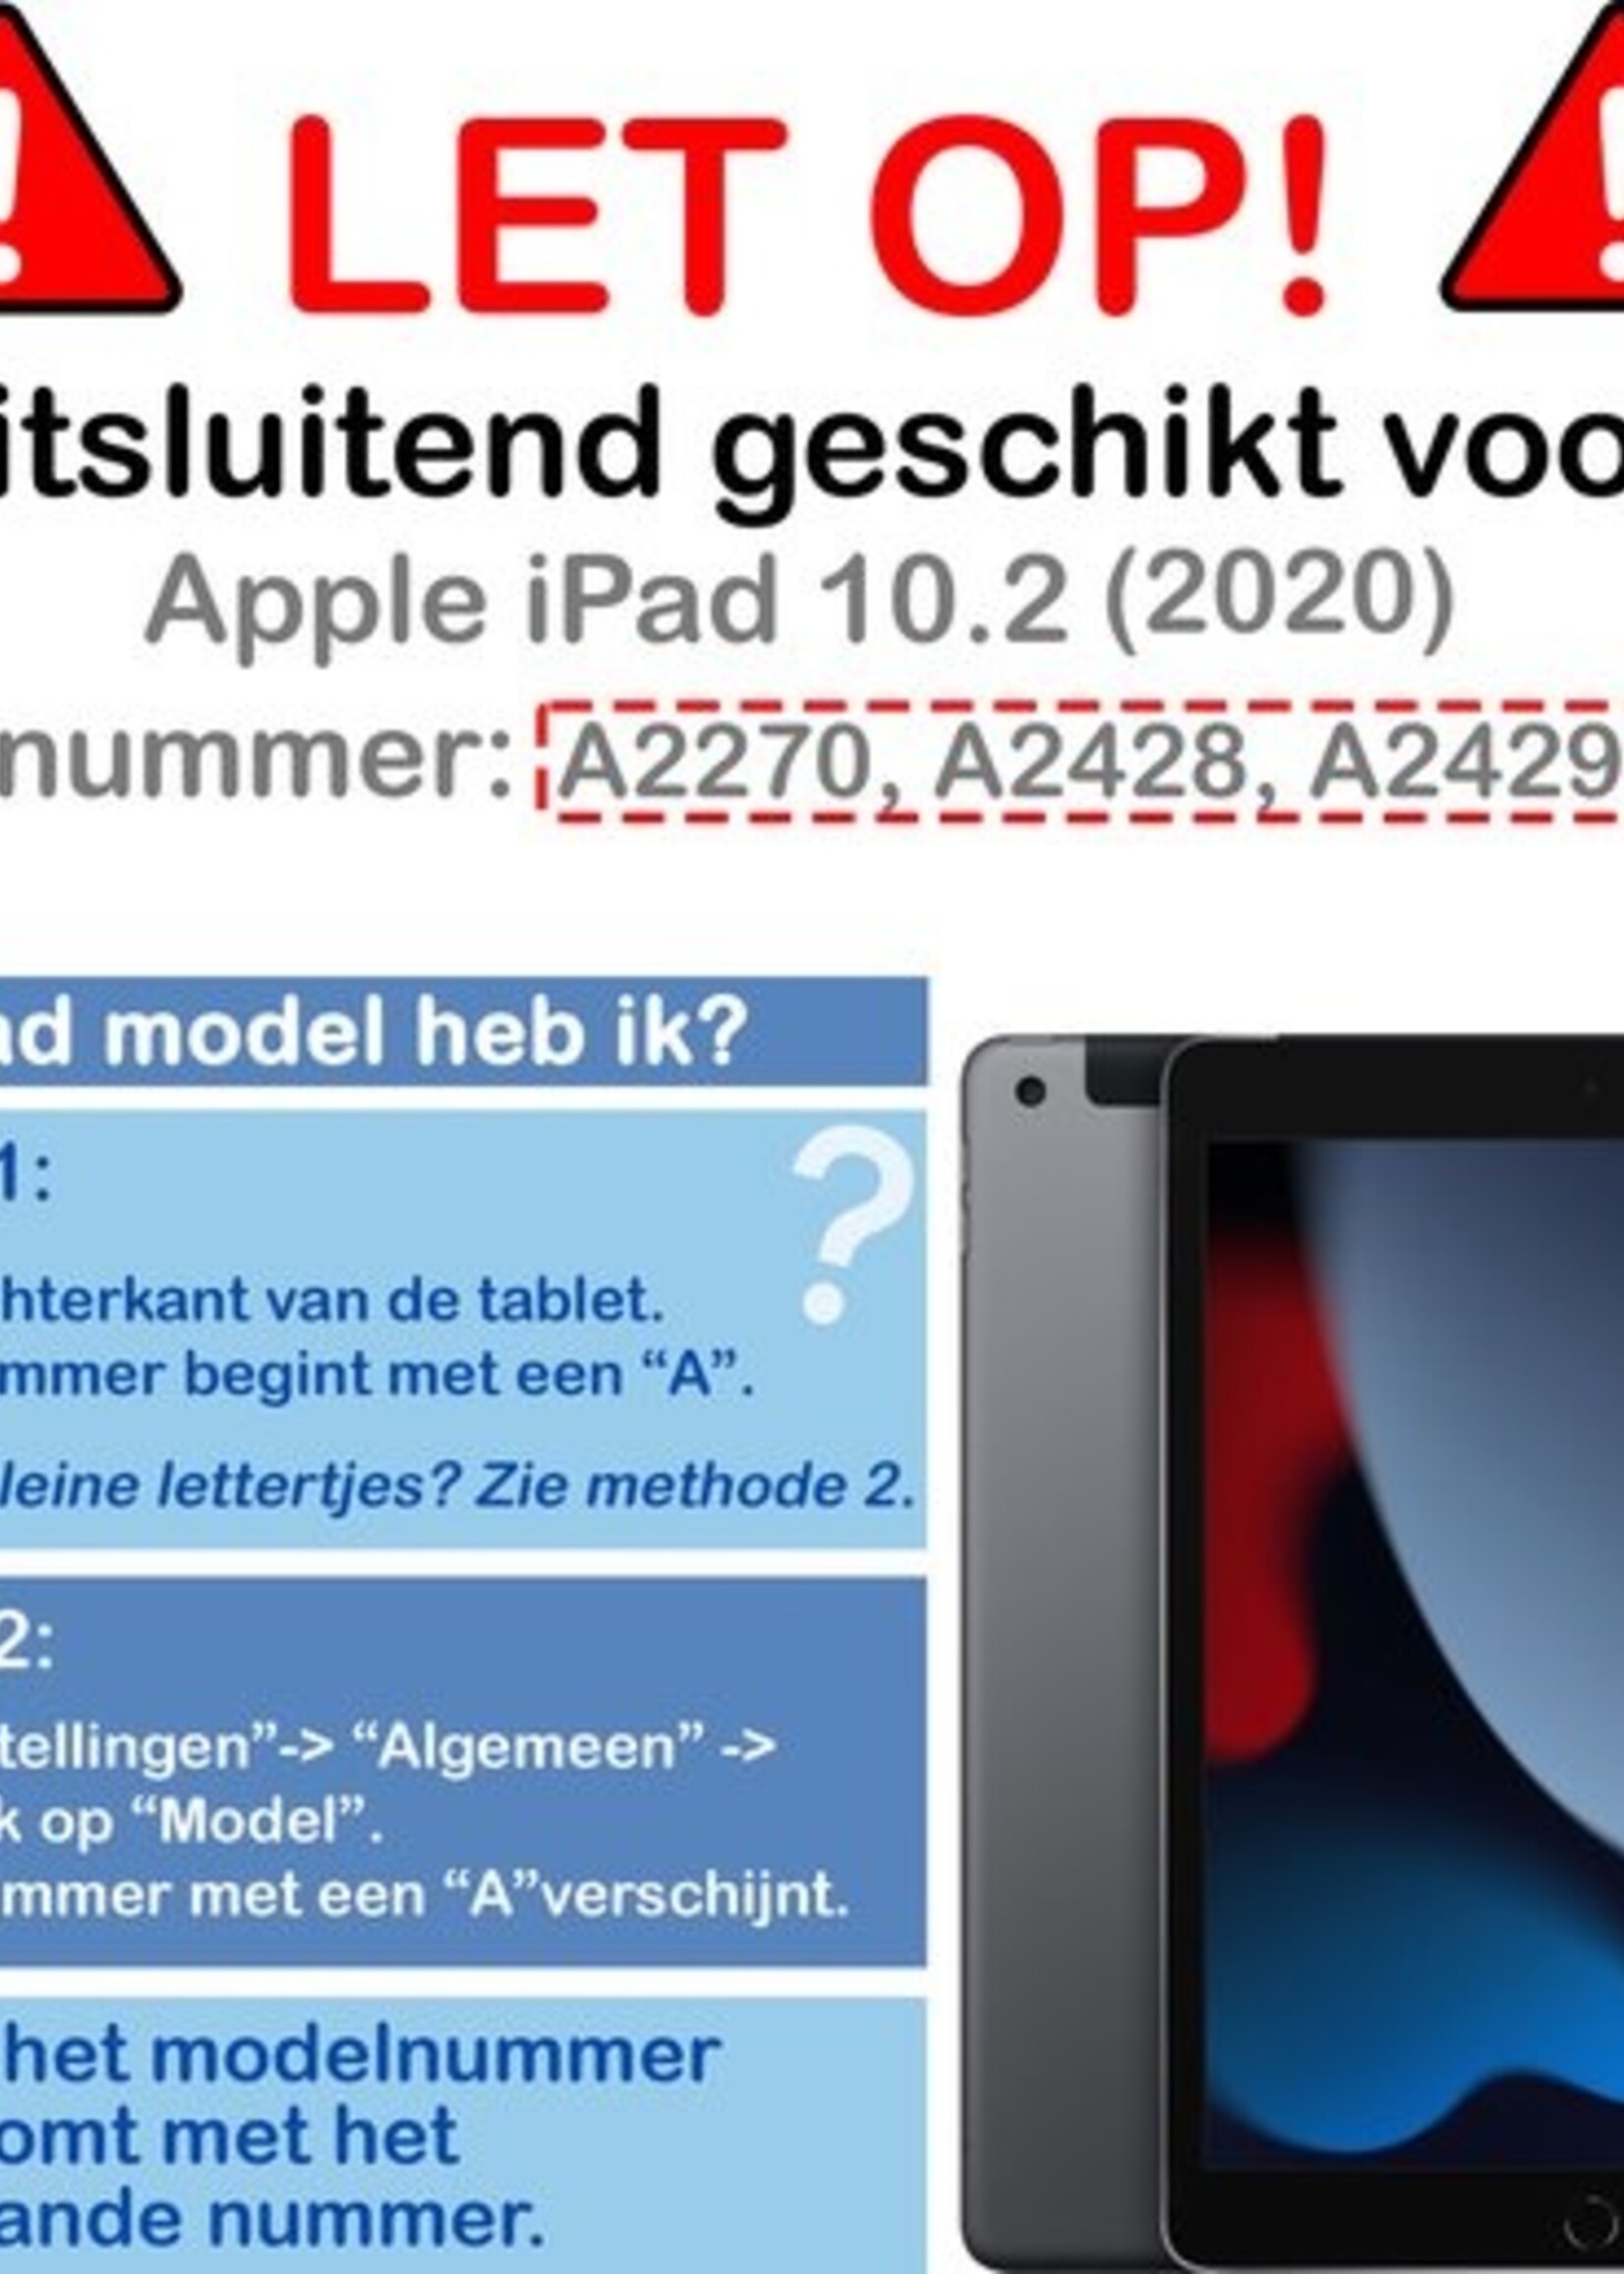 BTH iPad 10.2 2020 Hoesje Toetsenbord Hoes Luxe Keyboard Case Cover - Rose Goud